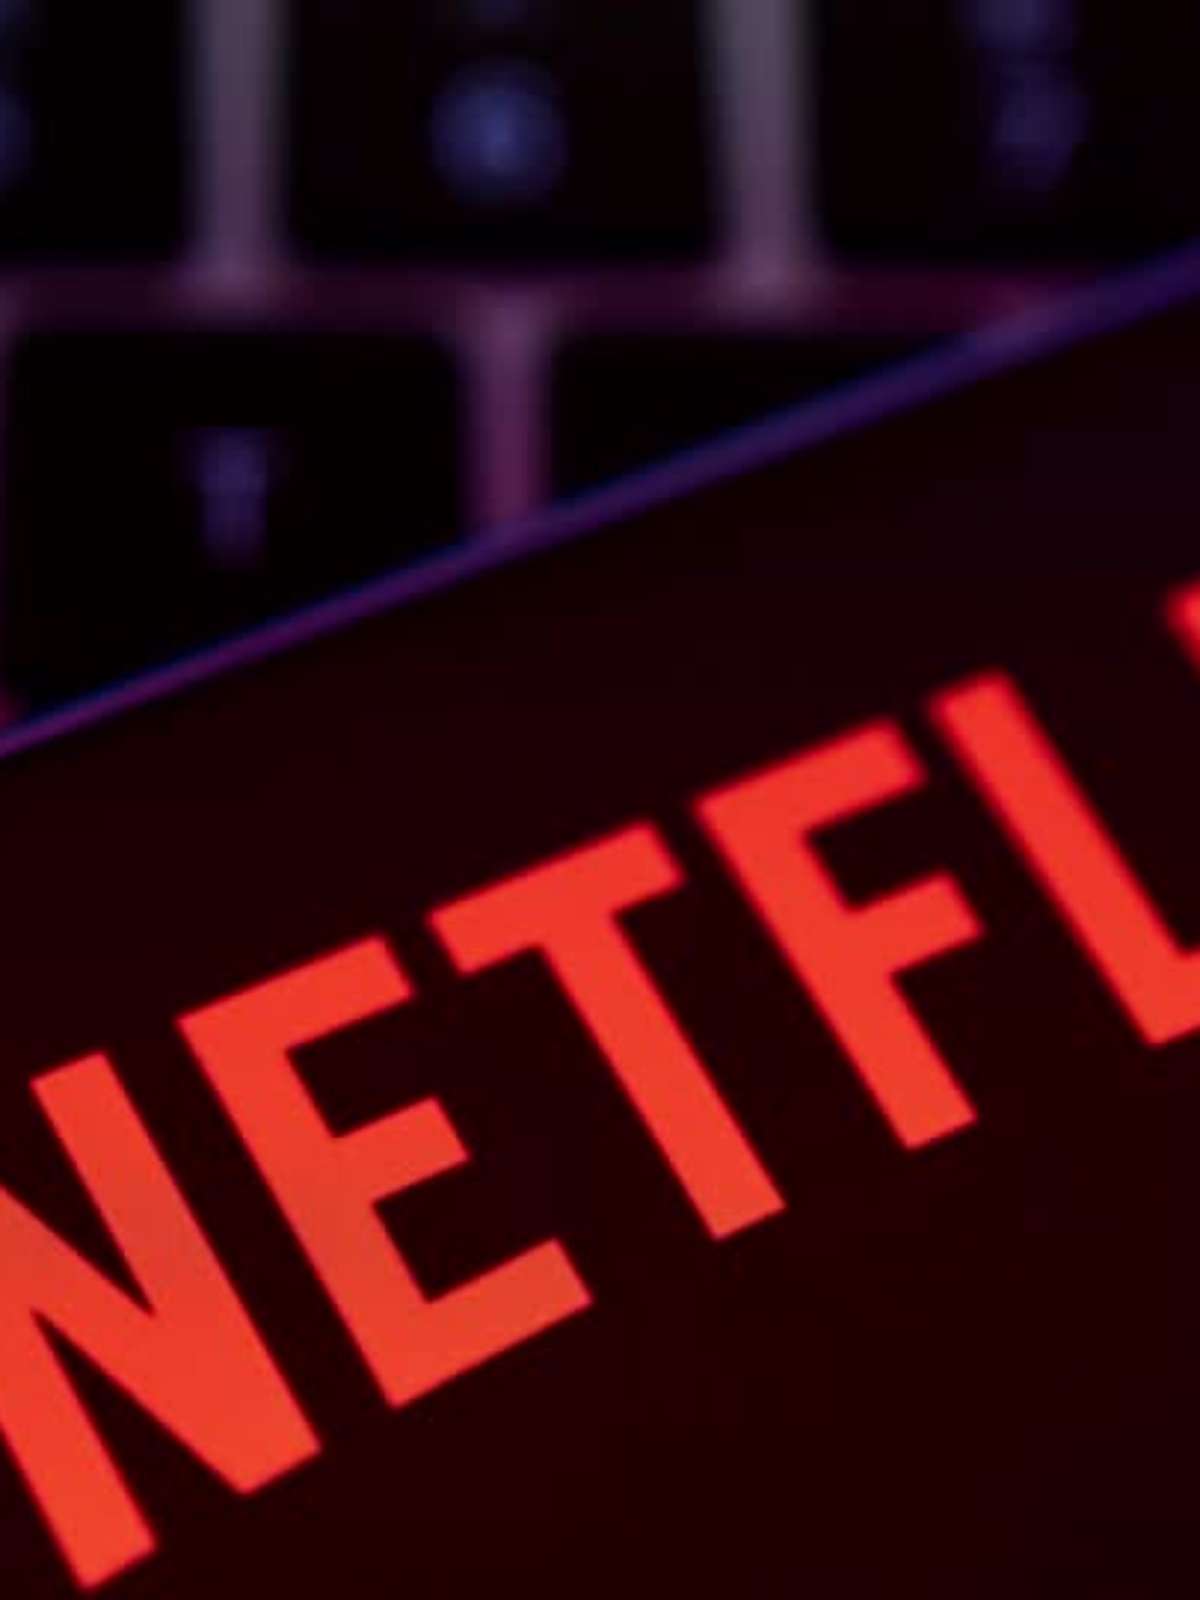 Plano da Netflix de taxar contas compartilhadas só está confundindo  assinantes – Tecnoblog